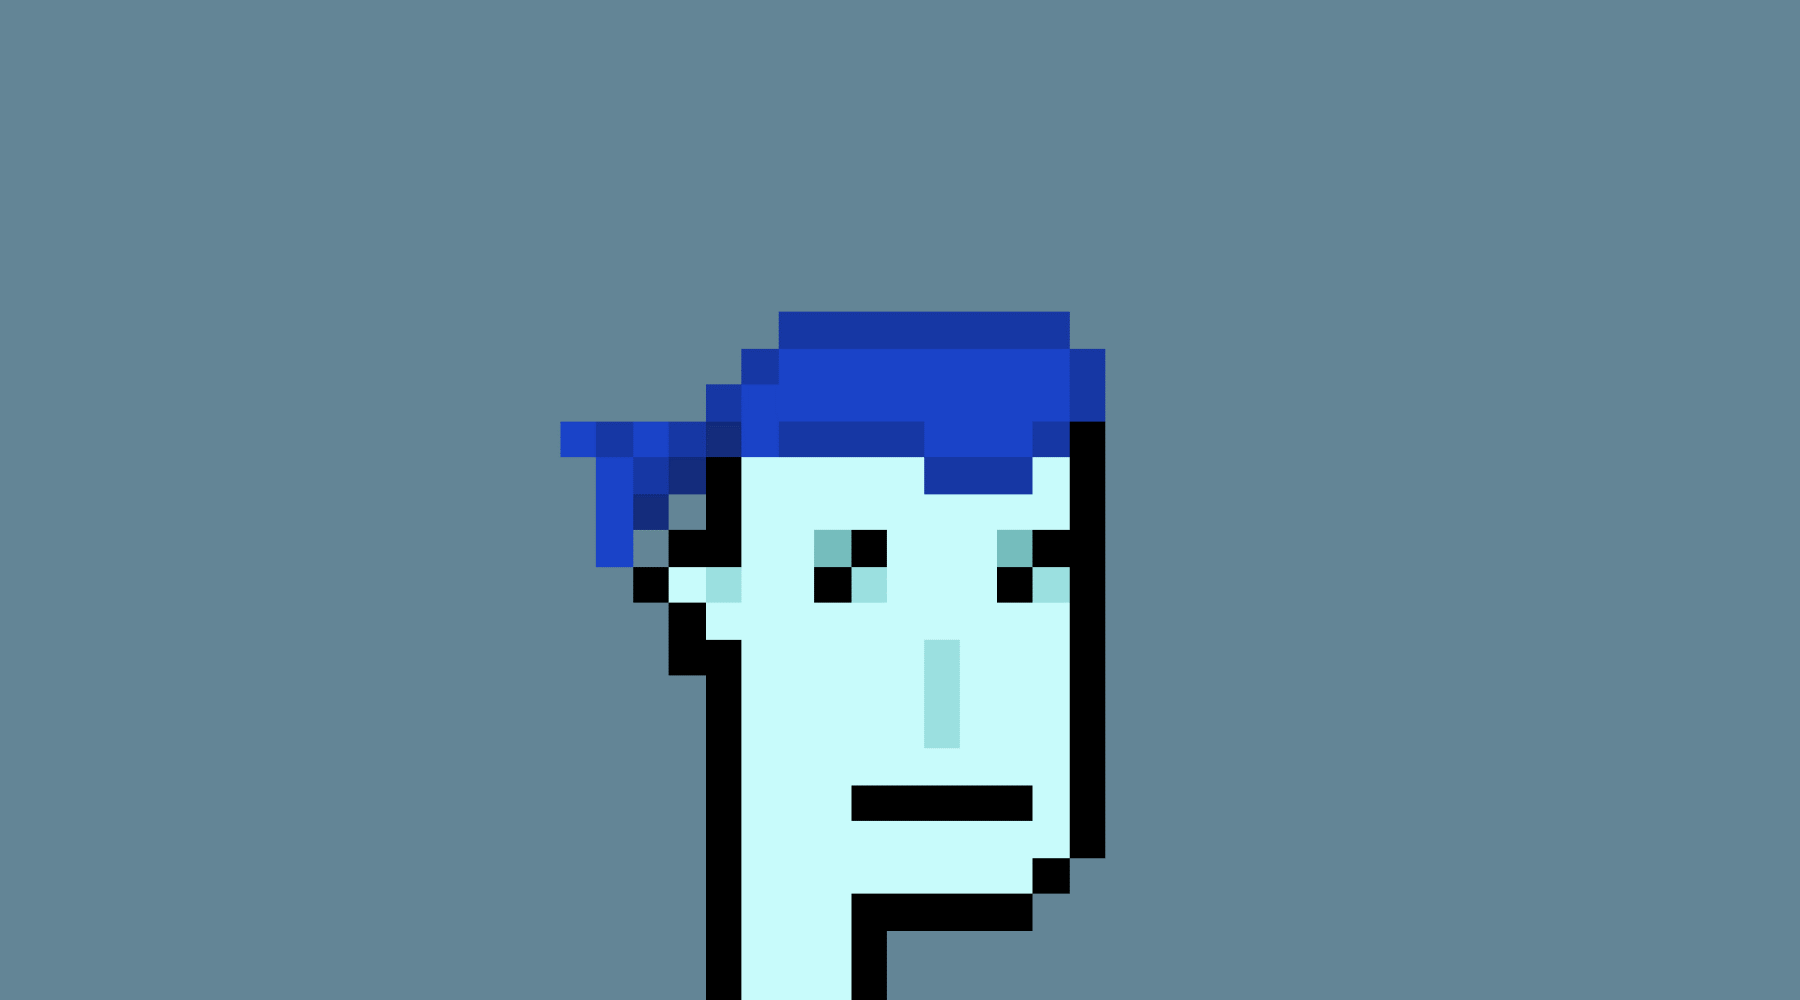 Larva Labs "CryptoPunk #5822" — a pixelated blue-skinned Alien Punk wearing a blue bandana